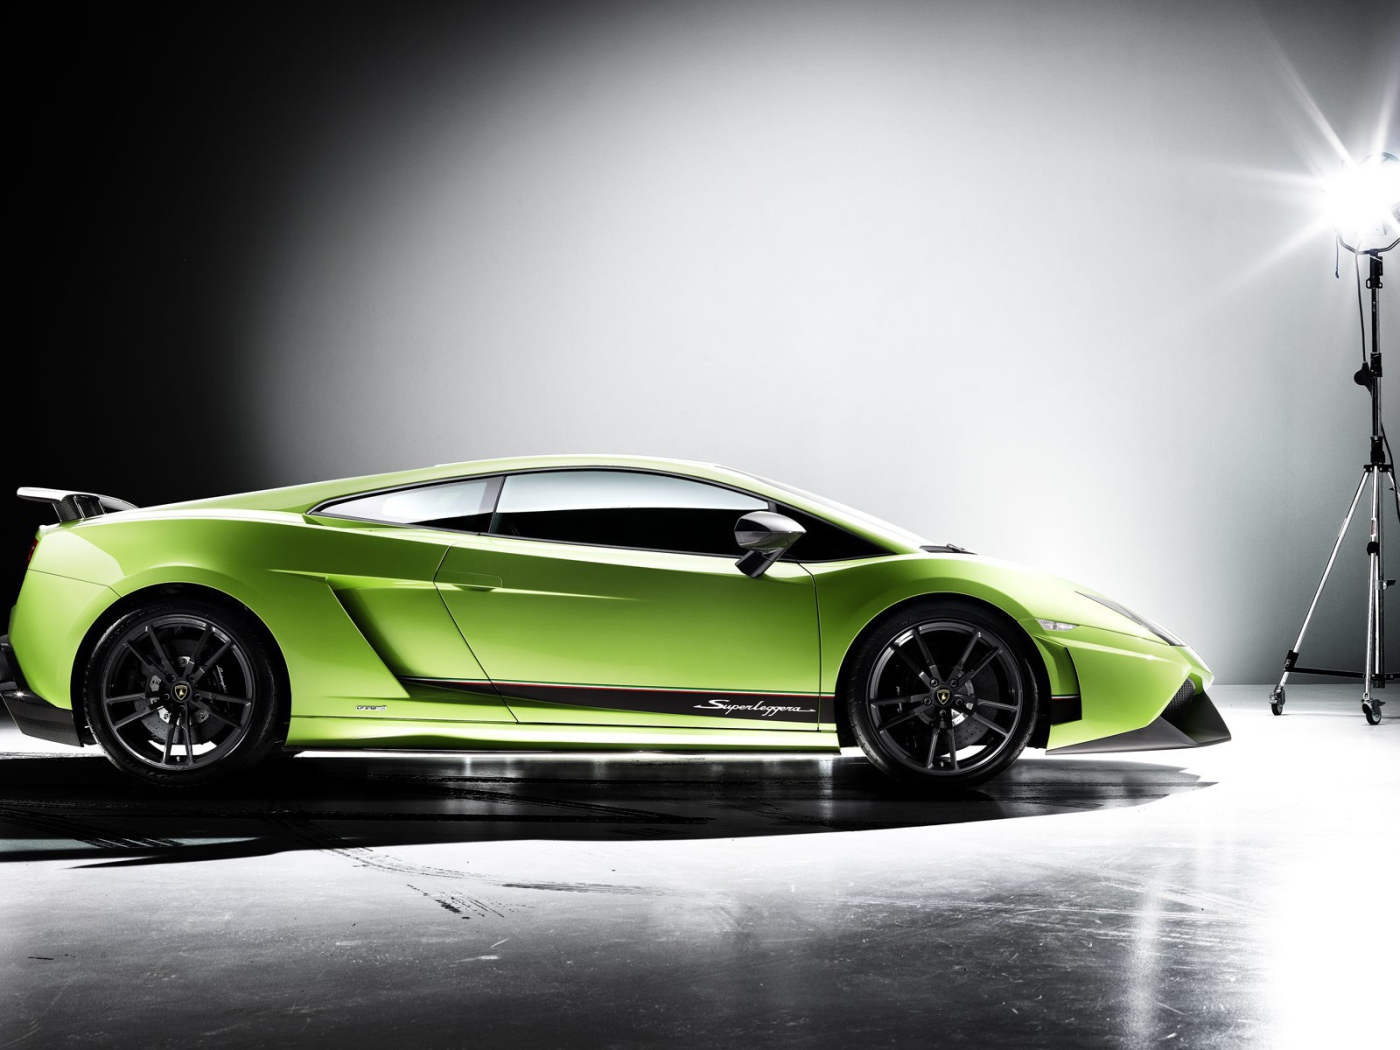 Фотосессия зеленого Lamborghini Gallardo Superleggera